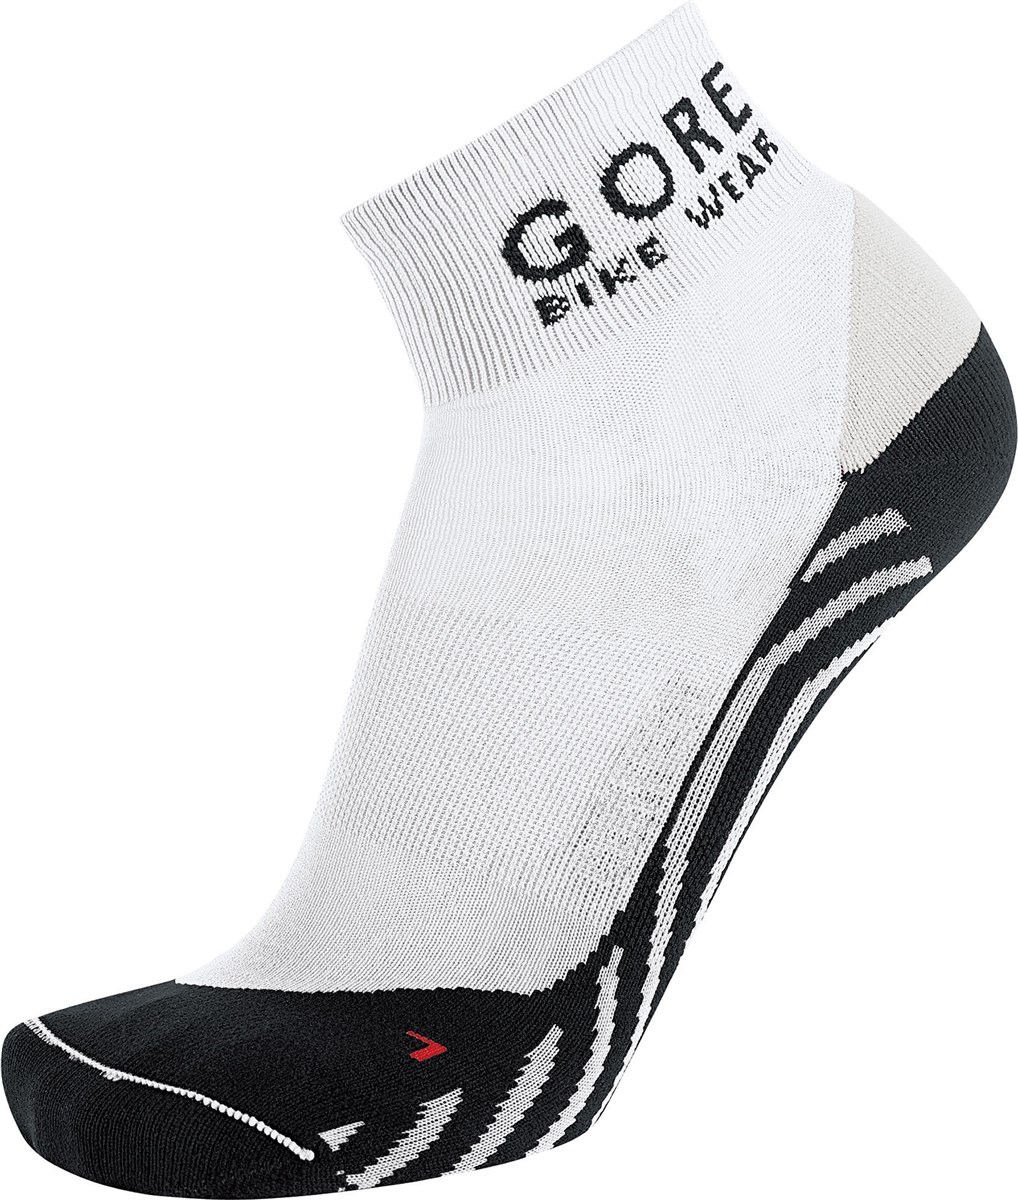 Gore Contest Socks AW17